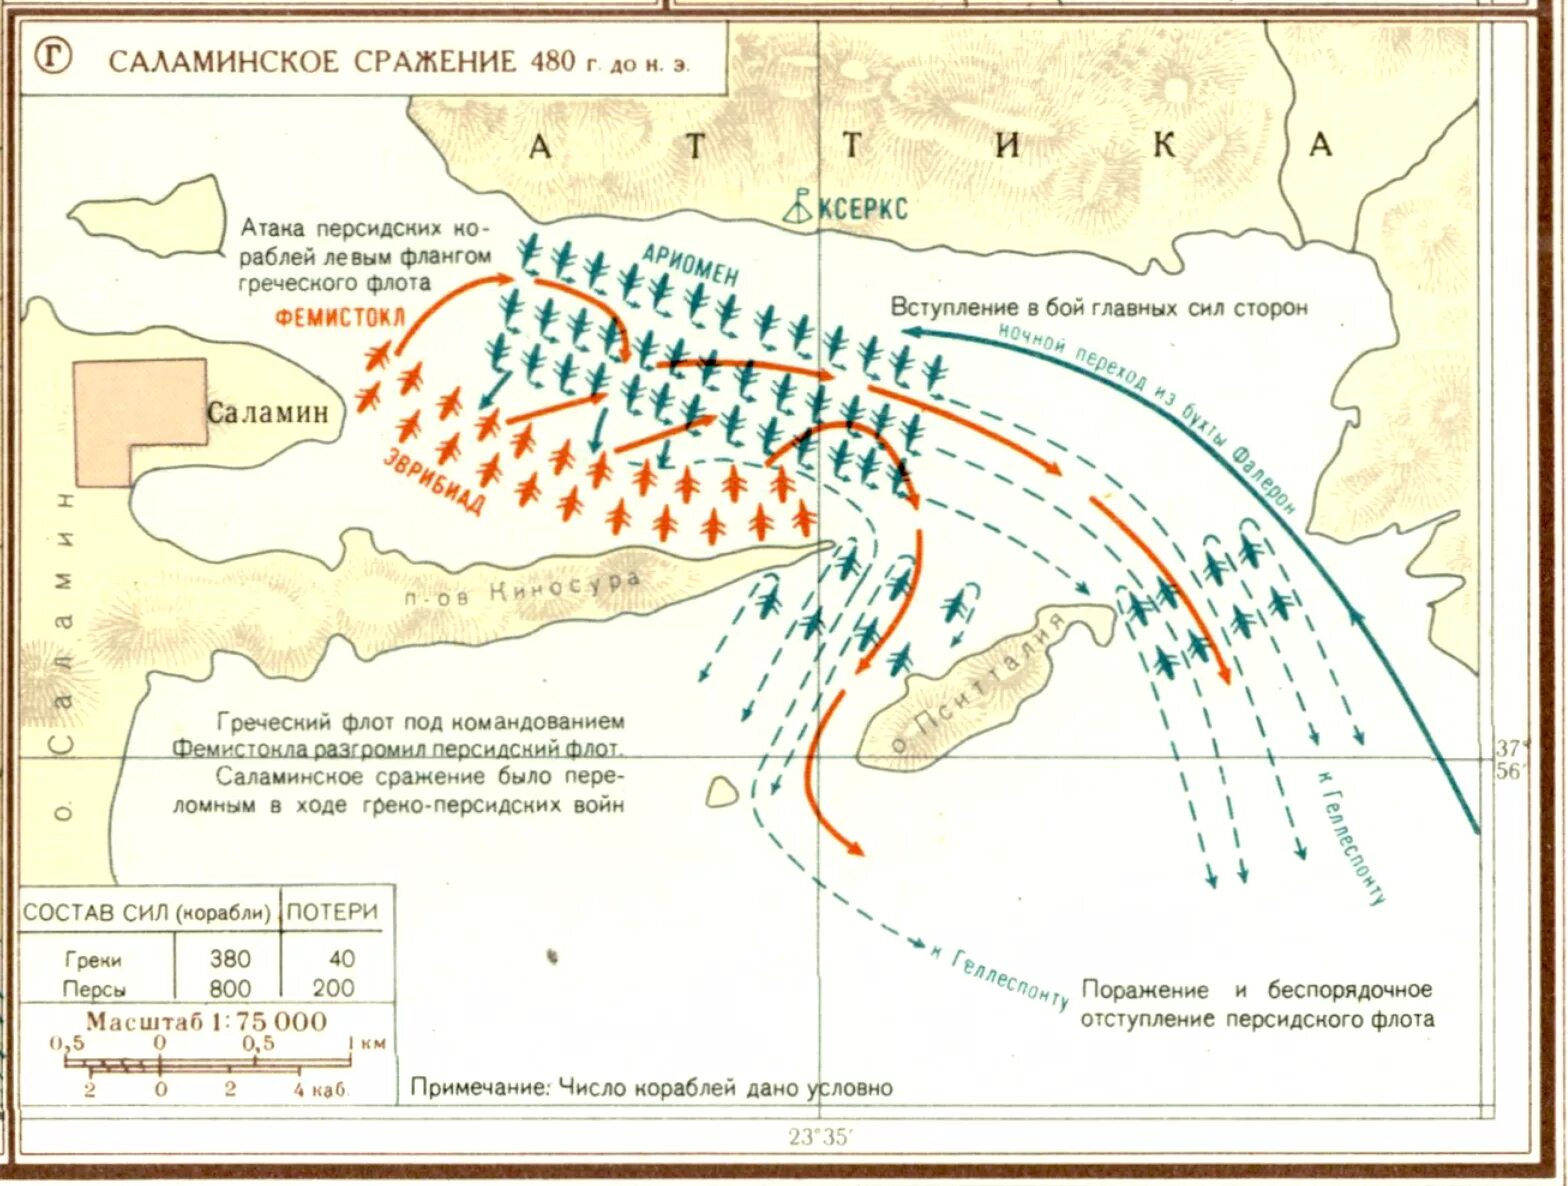 Где произошло саламинское сражение. Саламинское сражение 480 г до н. э.. Саламинское сражение Ксеркс. Саламинское сражение схема битвы. Саламинское сражение карта схема.